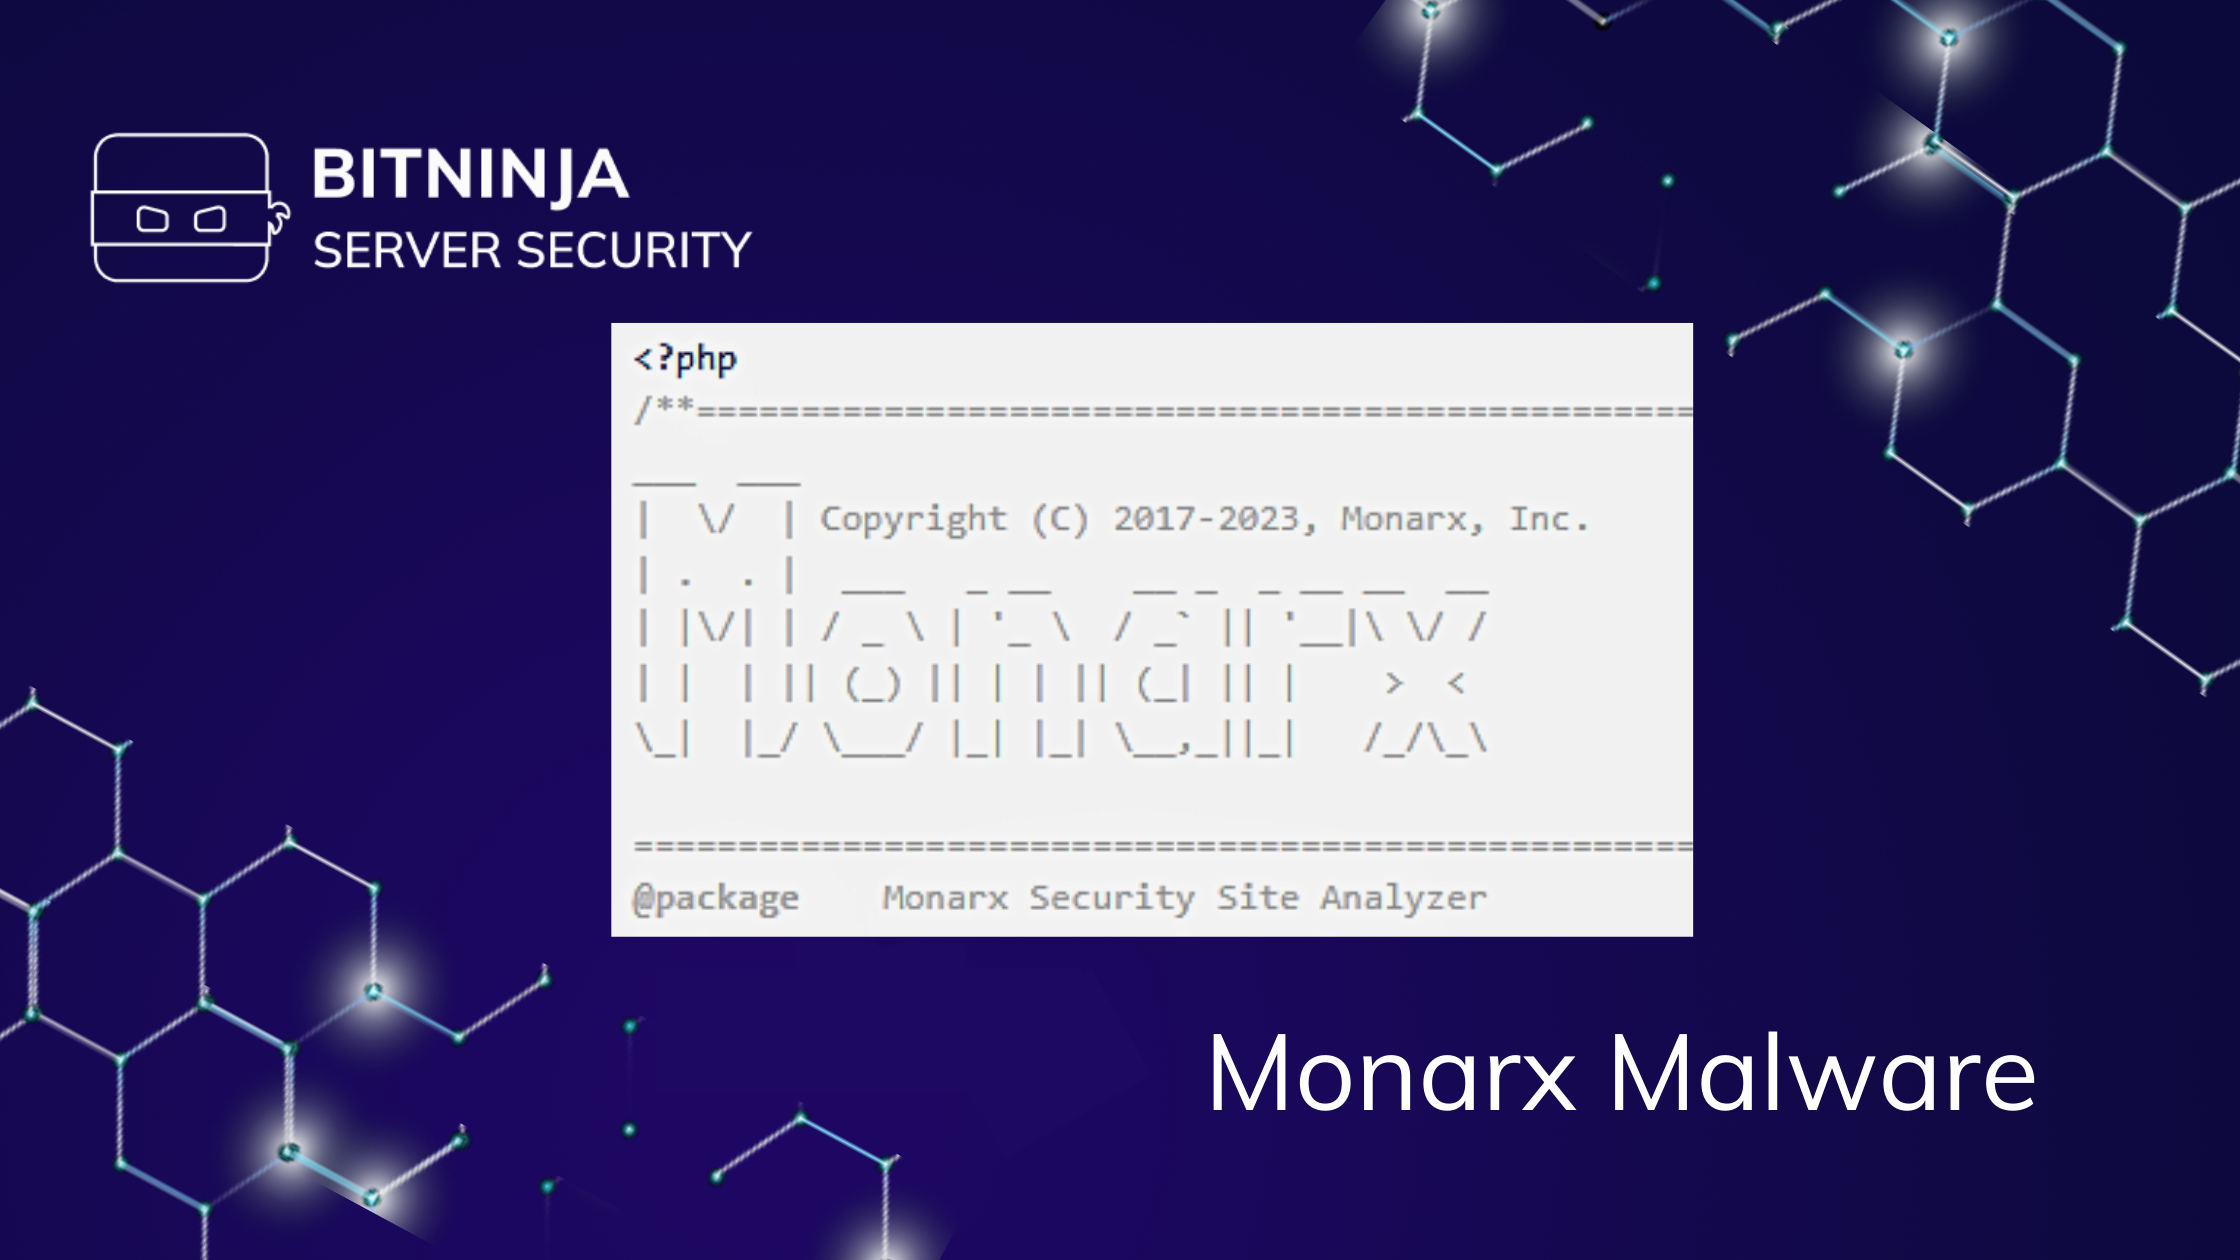 Cybersecurity Experts BitNinja Warn of Emerging “Monarx Malware” Threat